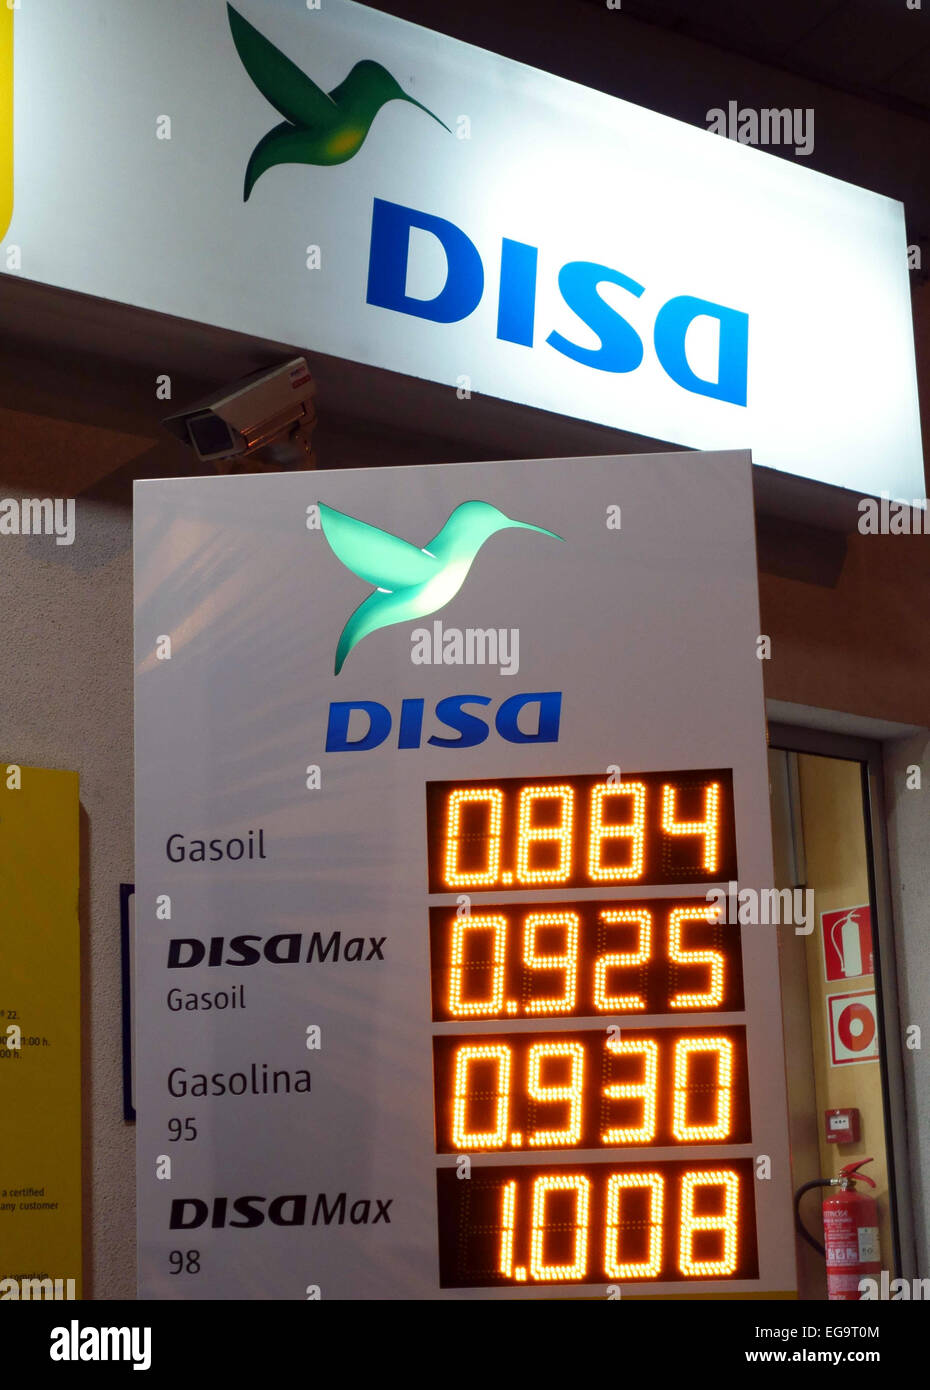 Disa brand petrol station in Las Palmas de Gran Canaria, Canary Islands, Spain Stock Photo